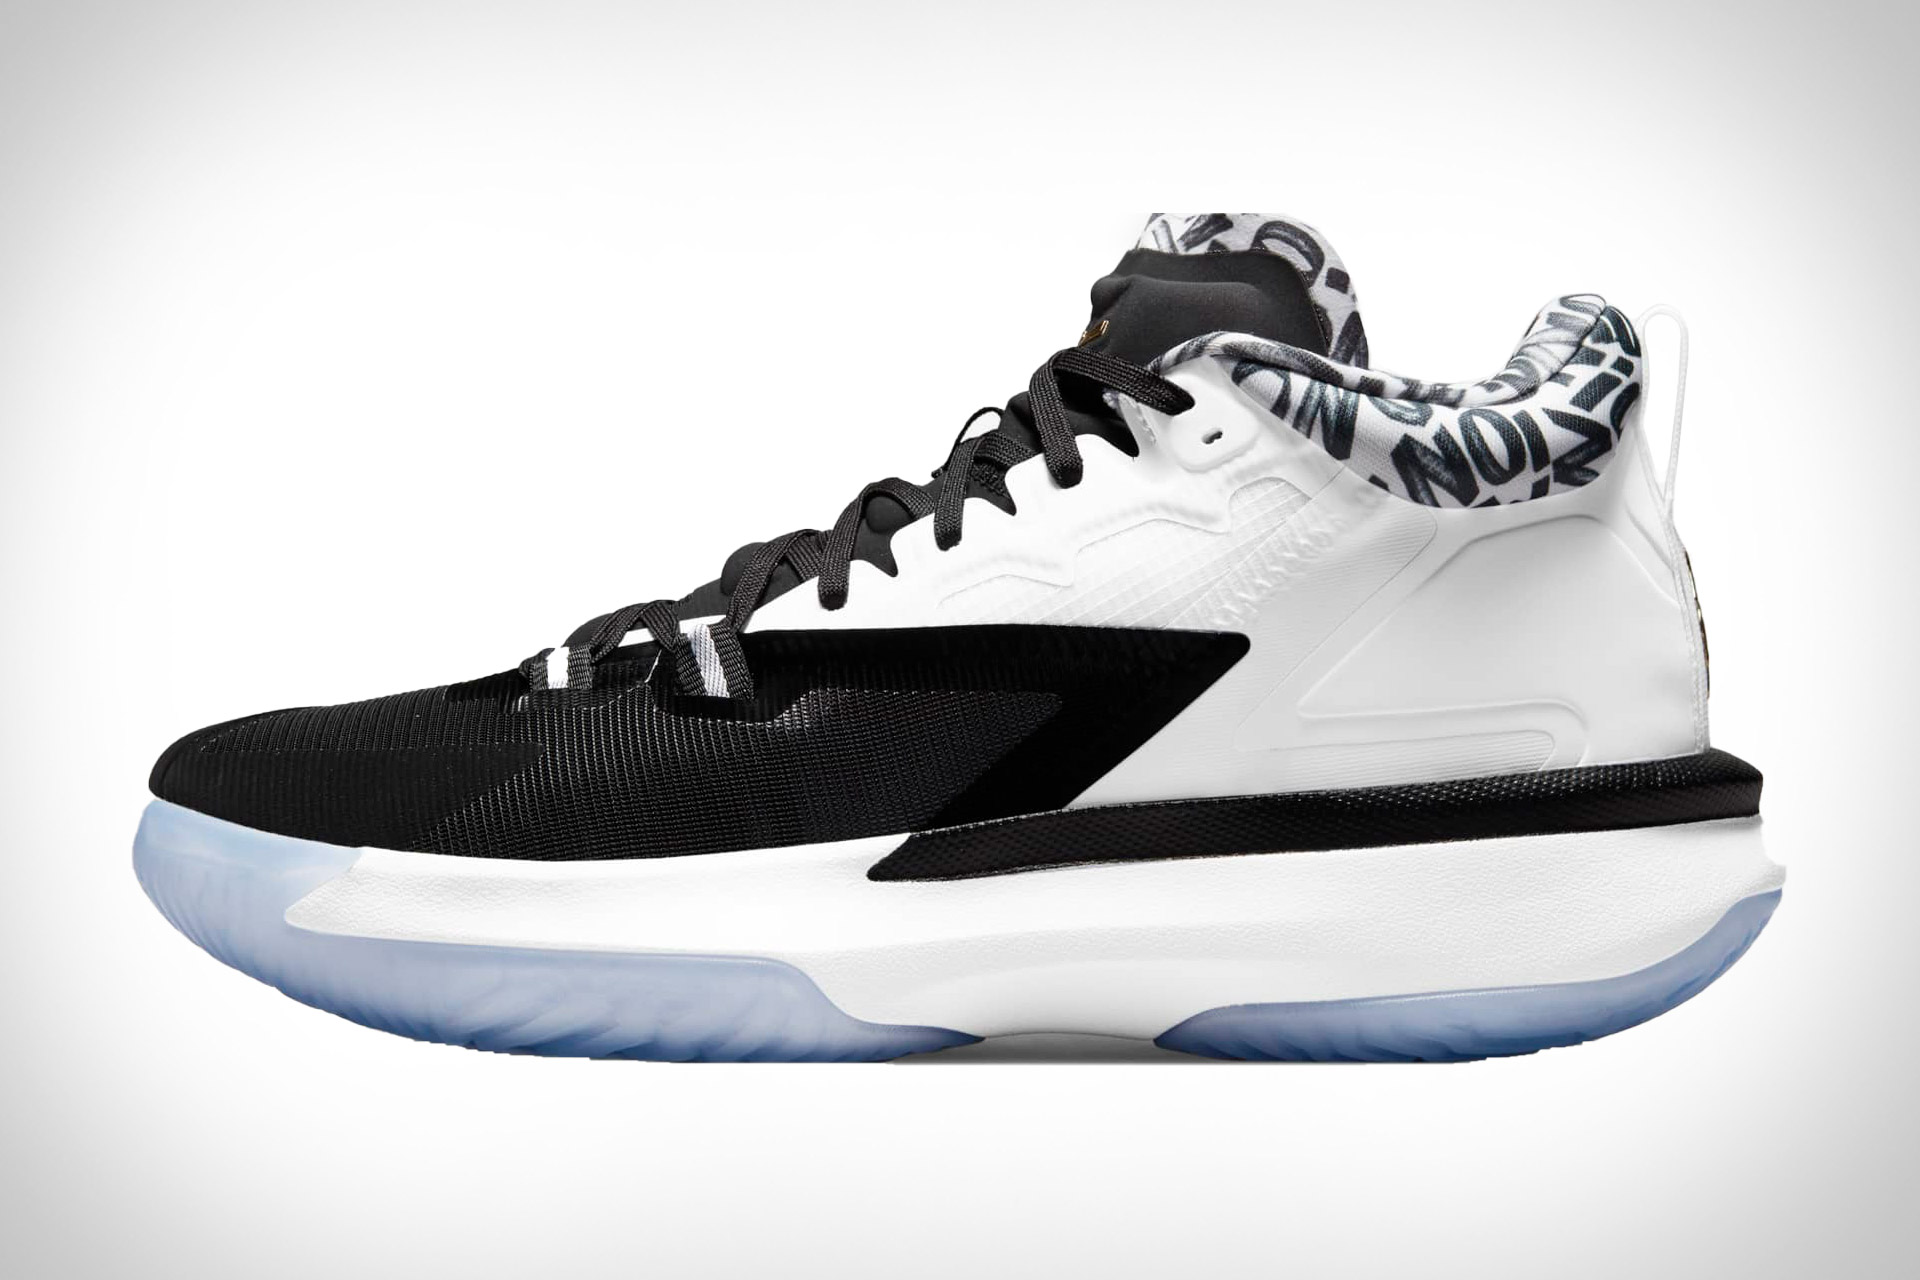 Jordan Brand unveils Zion Williamson's first signature shoe, the Zion 1